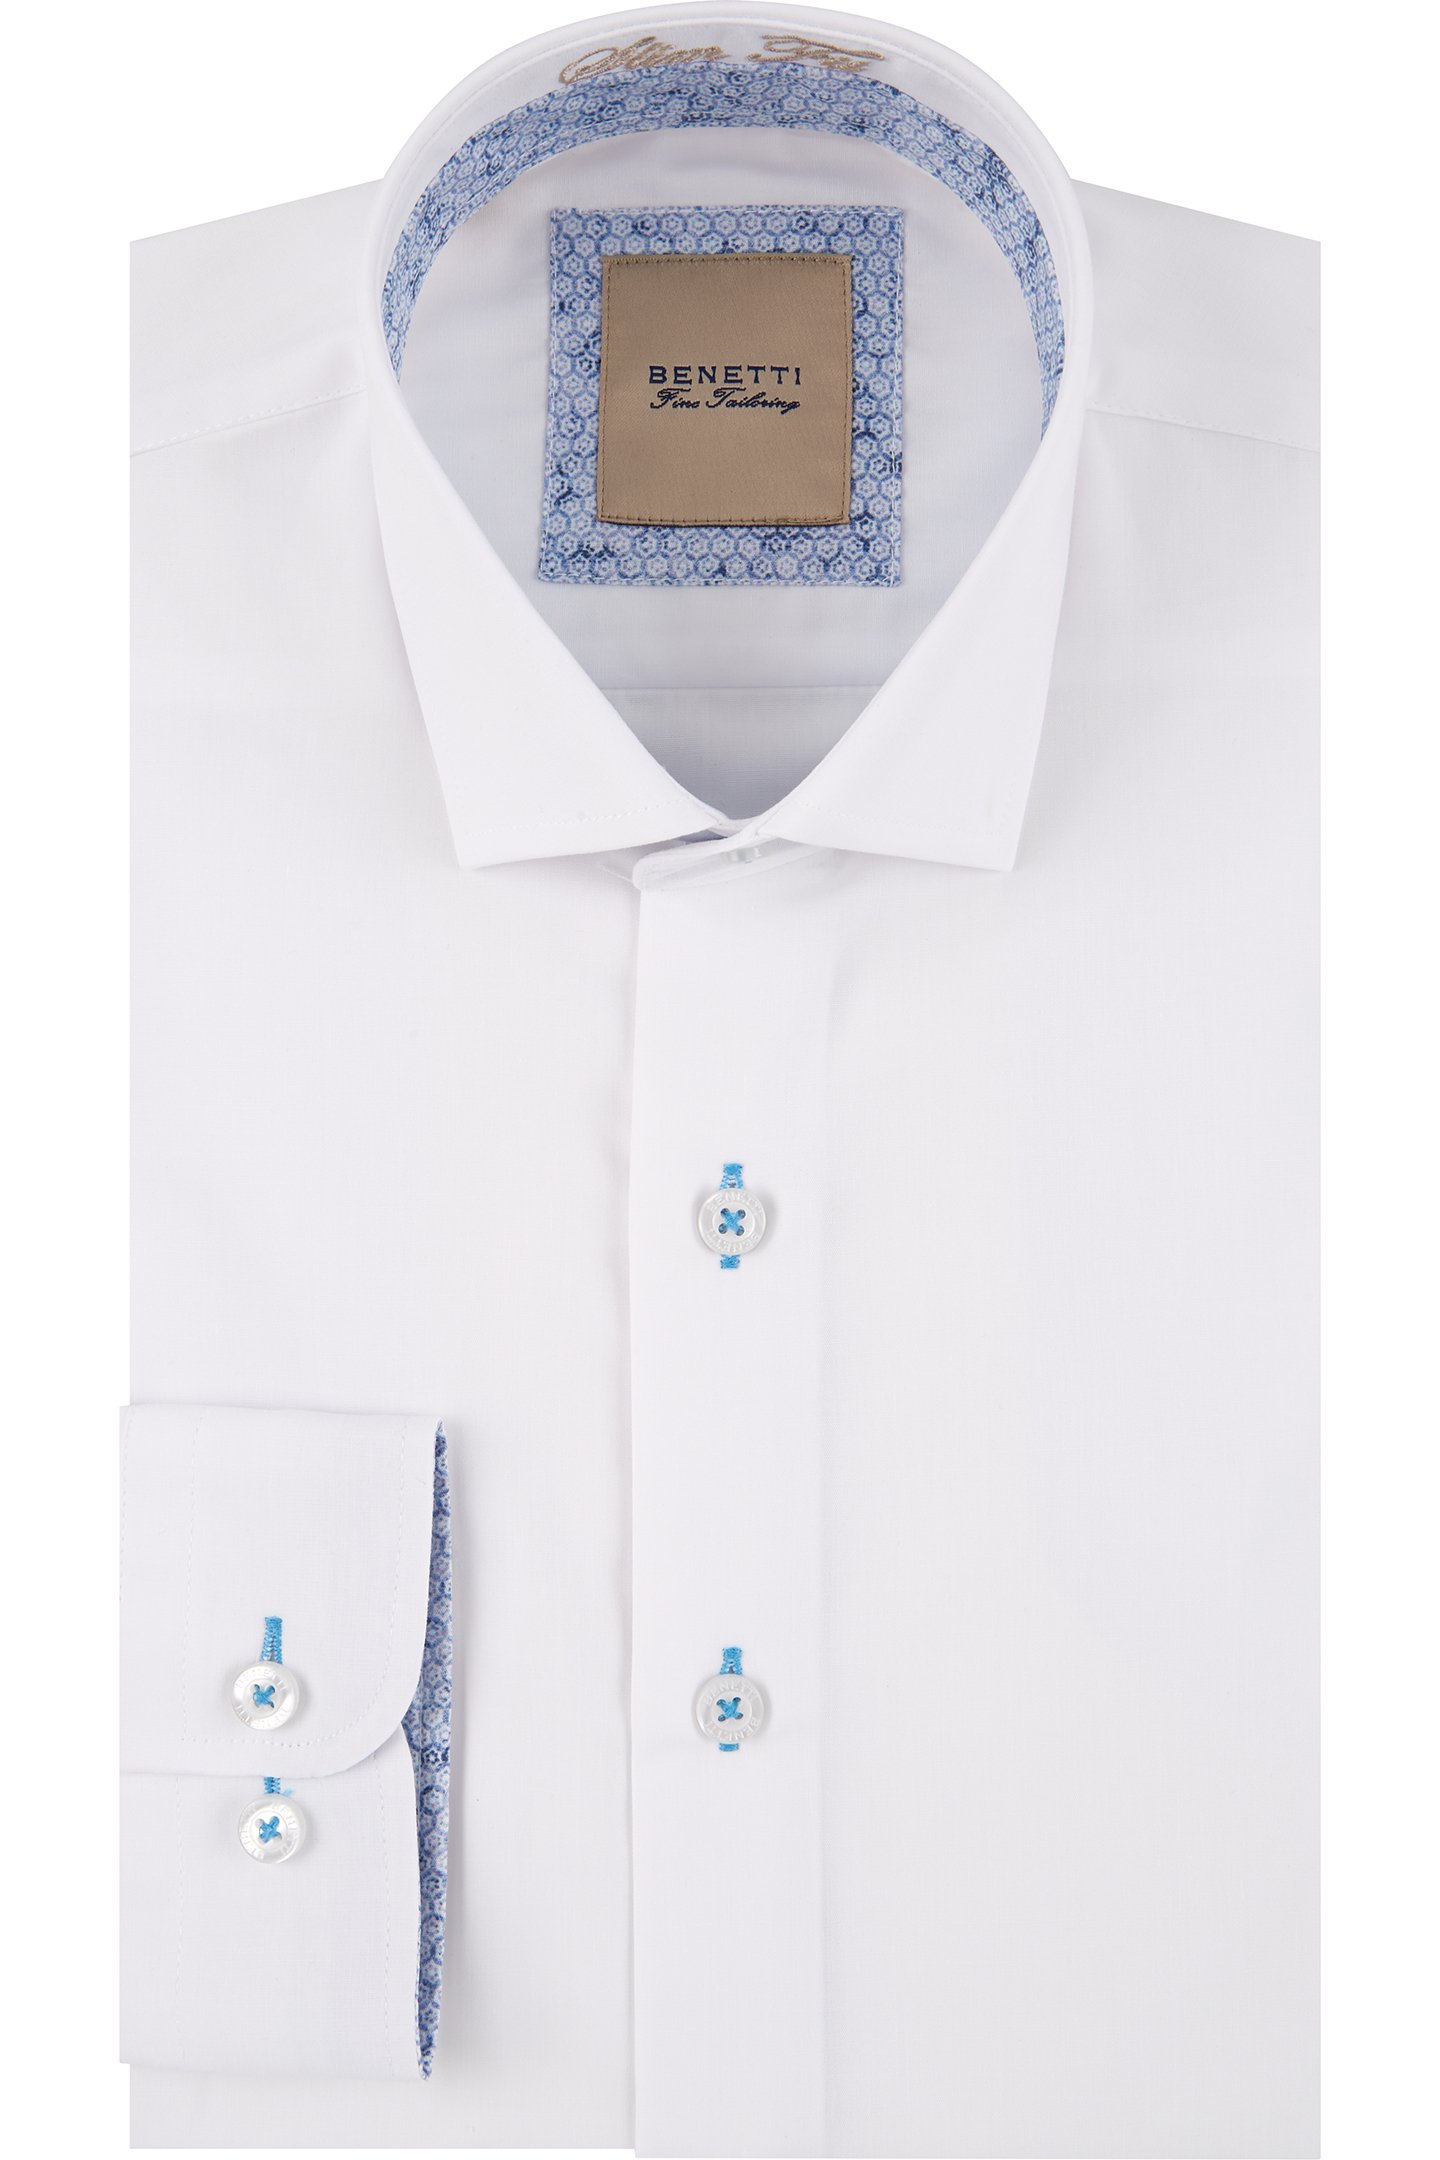 Benetti Slim Fit Formal Shirt - White - Hores Stores